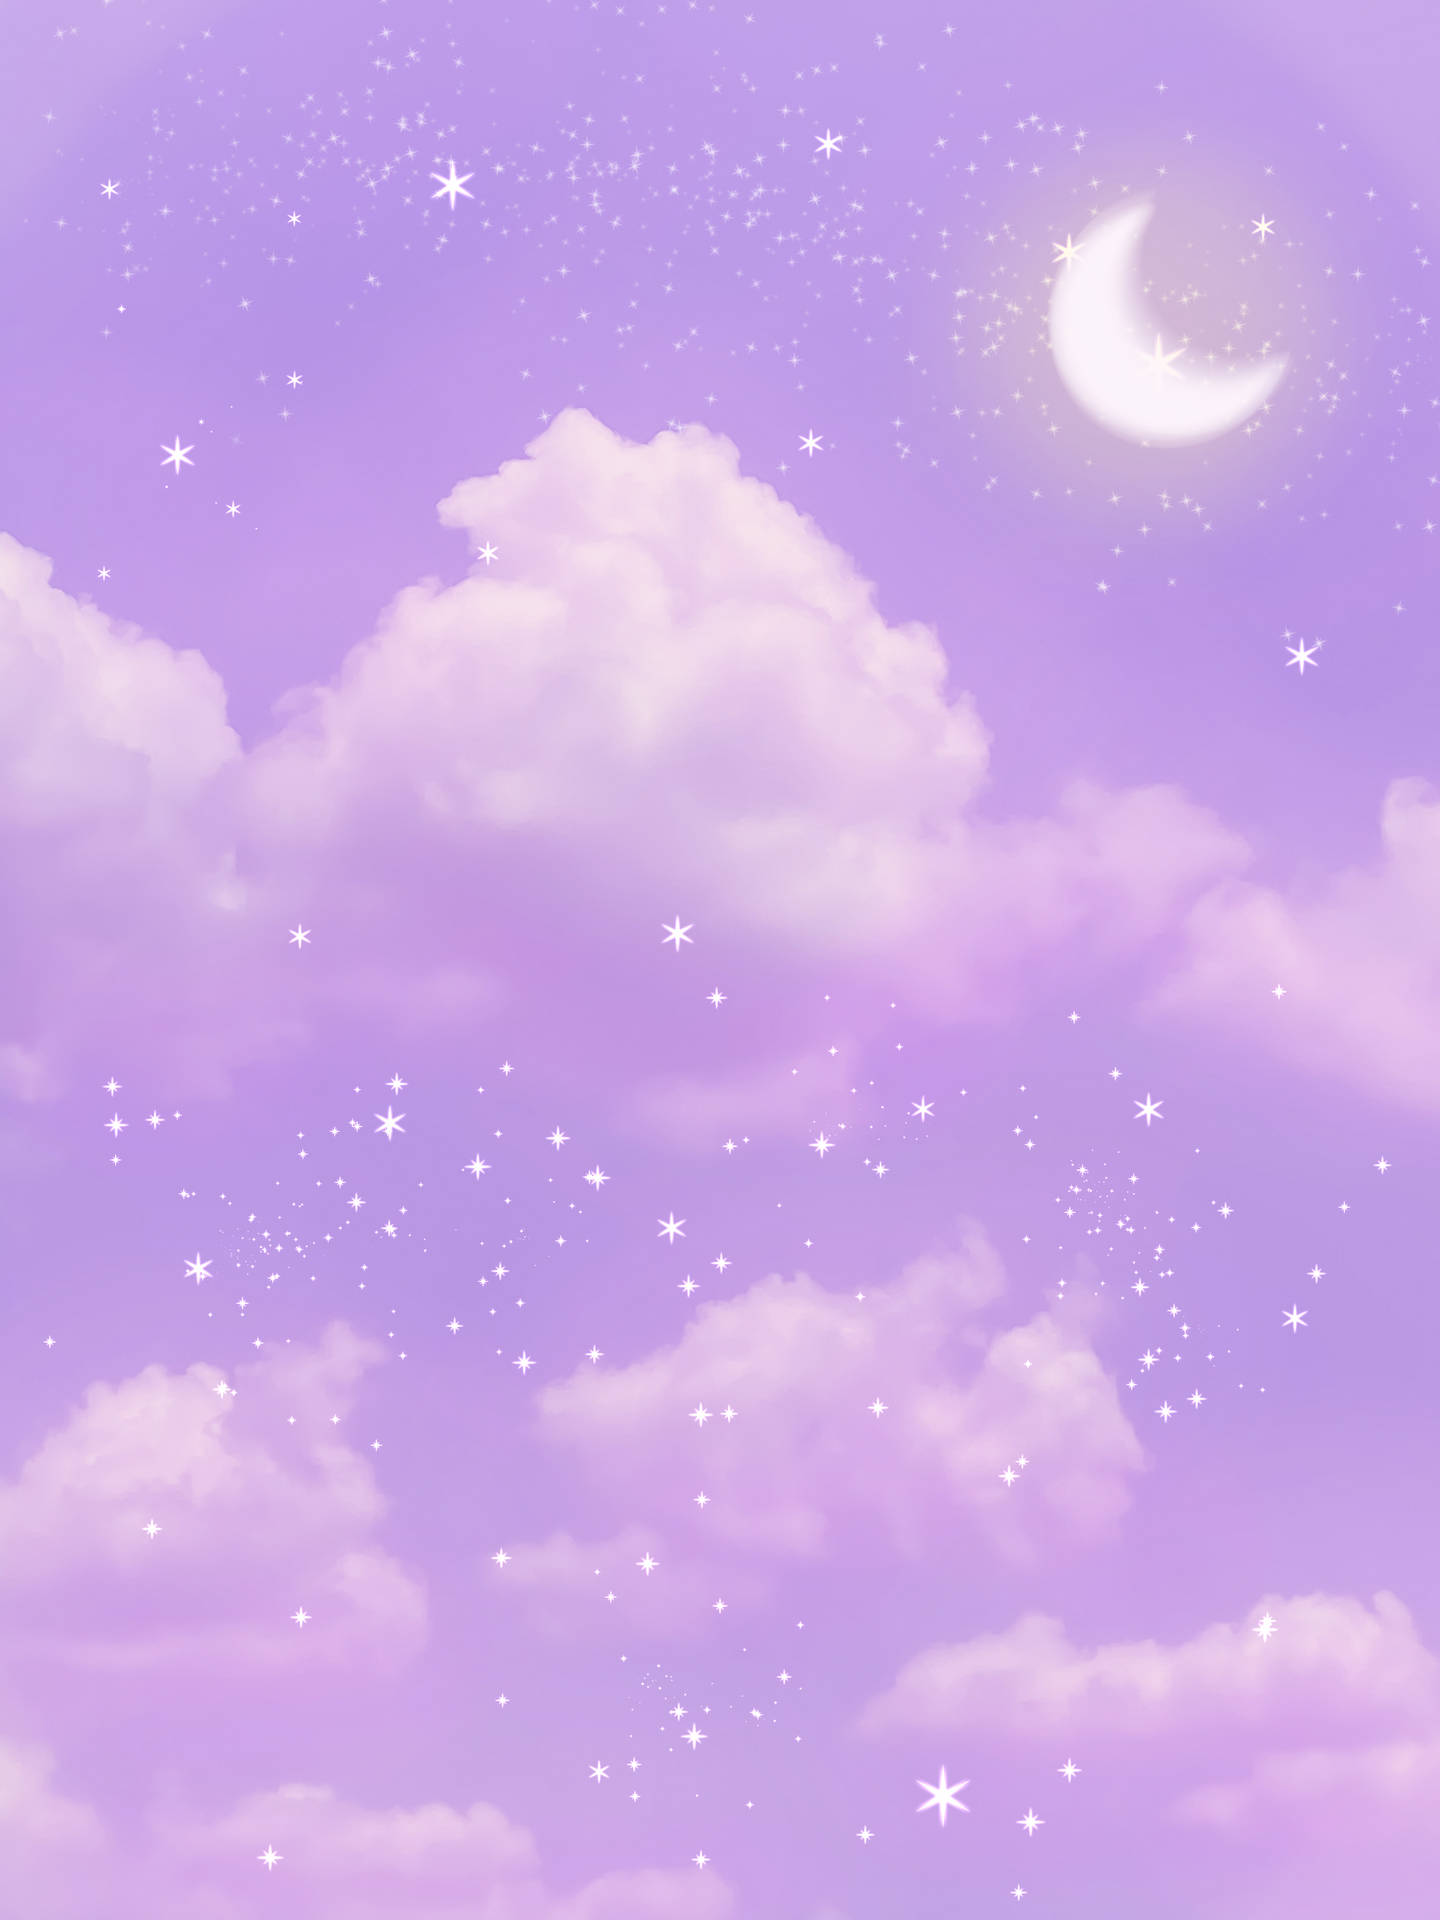 Pastel Purple Sky Clouds Wallpaper